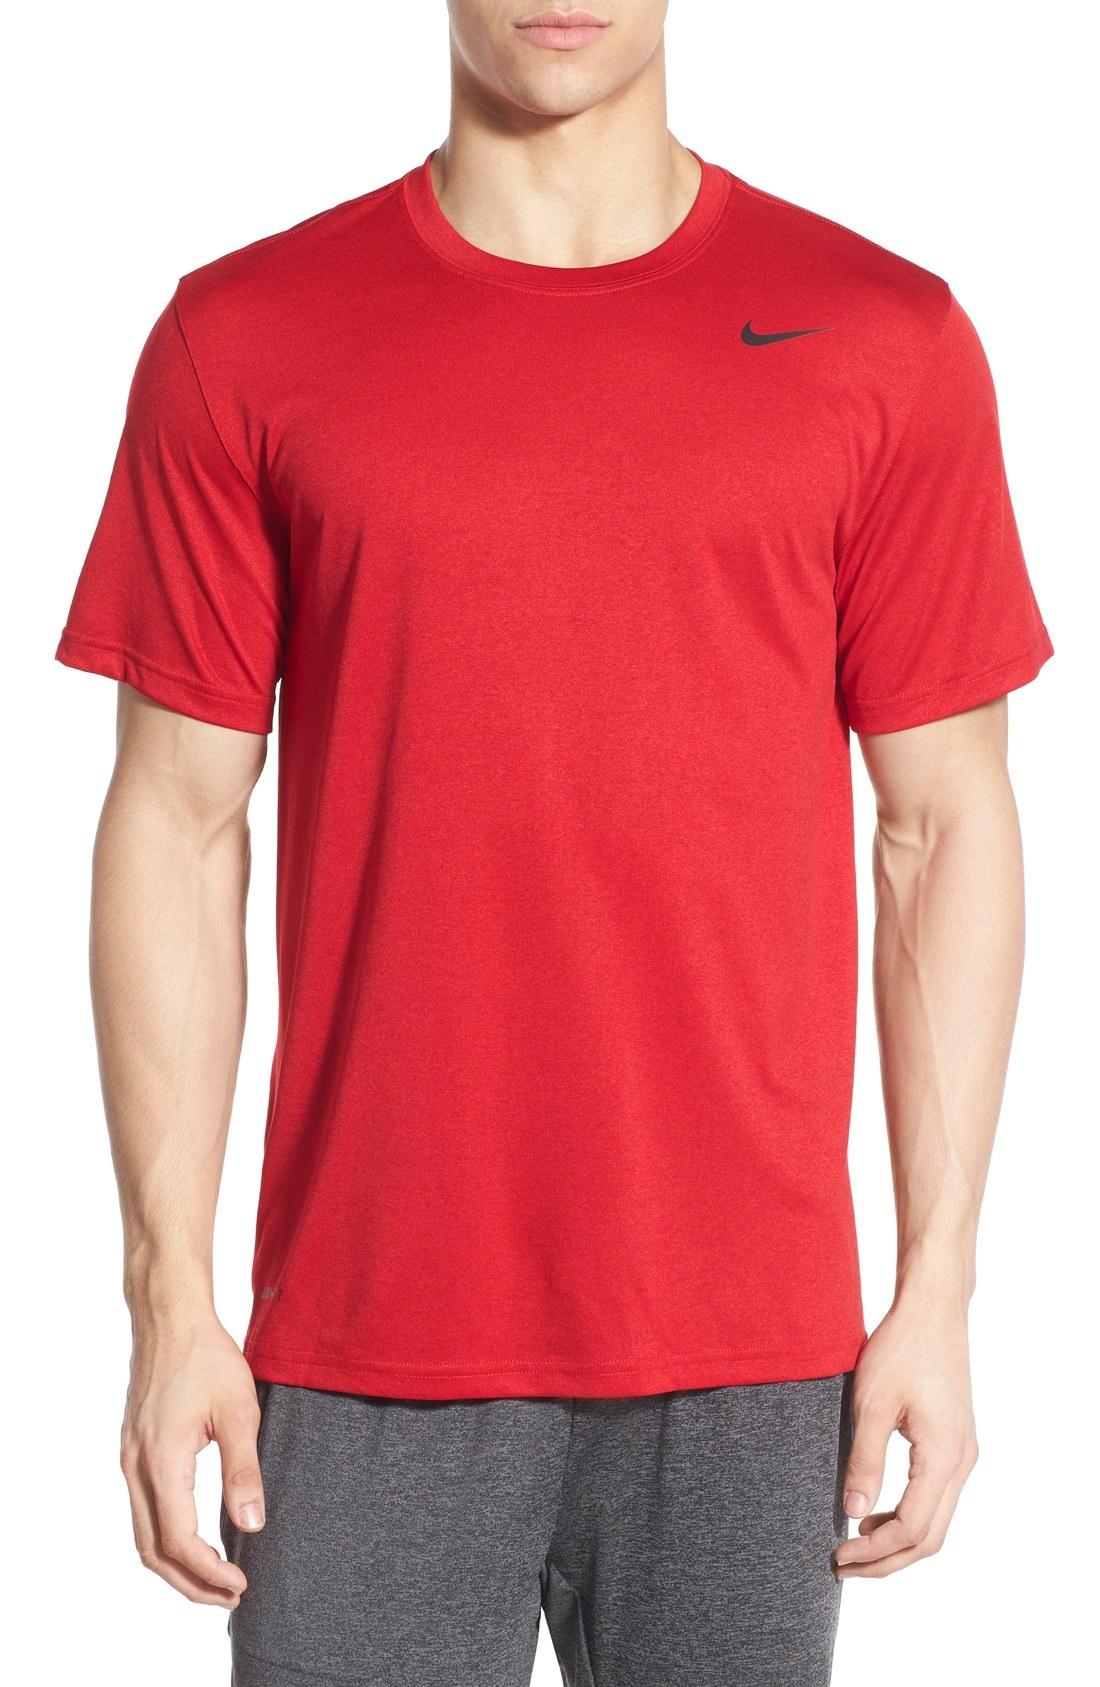 gym red nike shirt